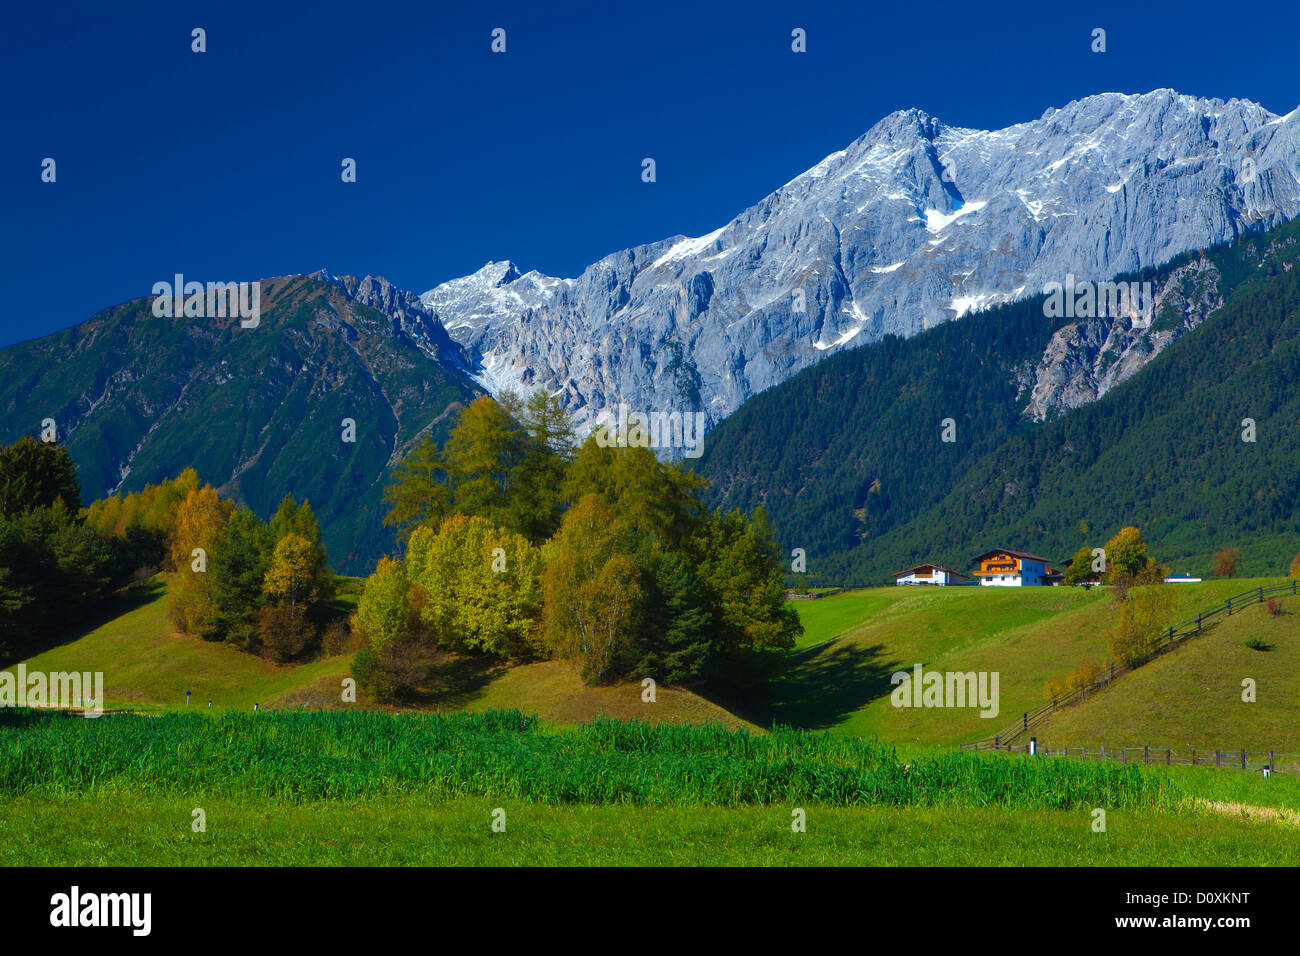 Austria, Europe, Tyrol, Tirol, Mieming, chain, plateau, Wildermieming, houses, homes, meadow, trees, mountains, Mieming, chain, Stock Photo